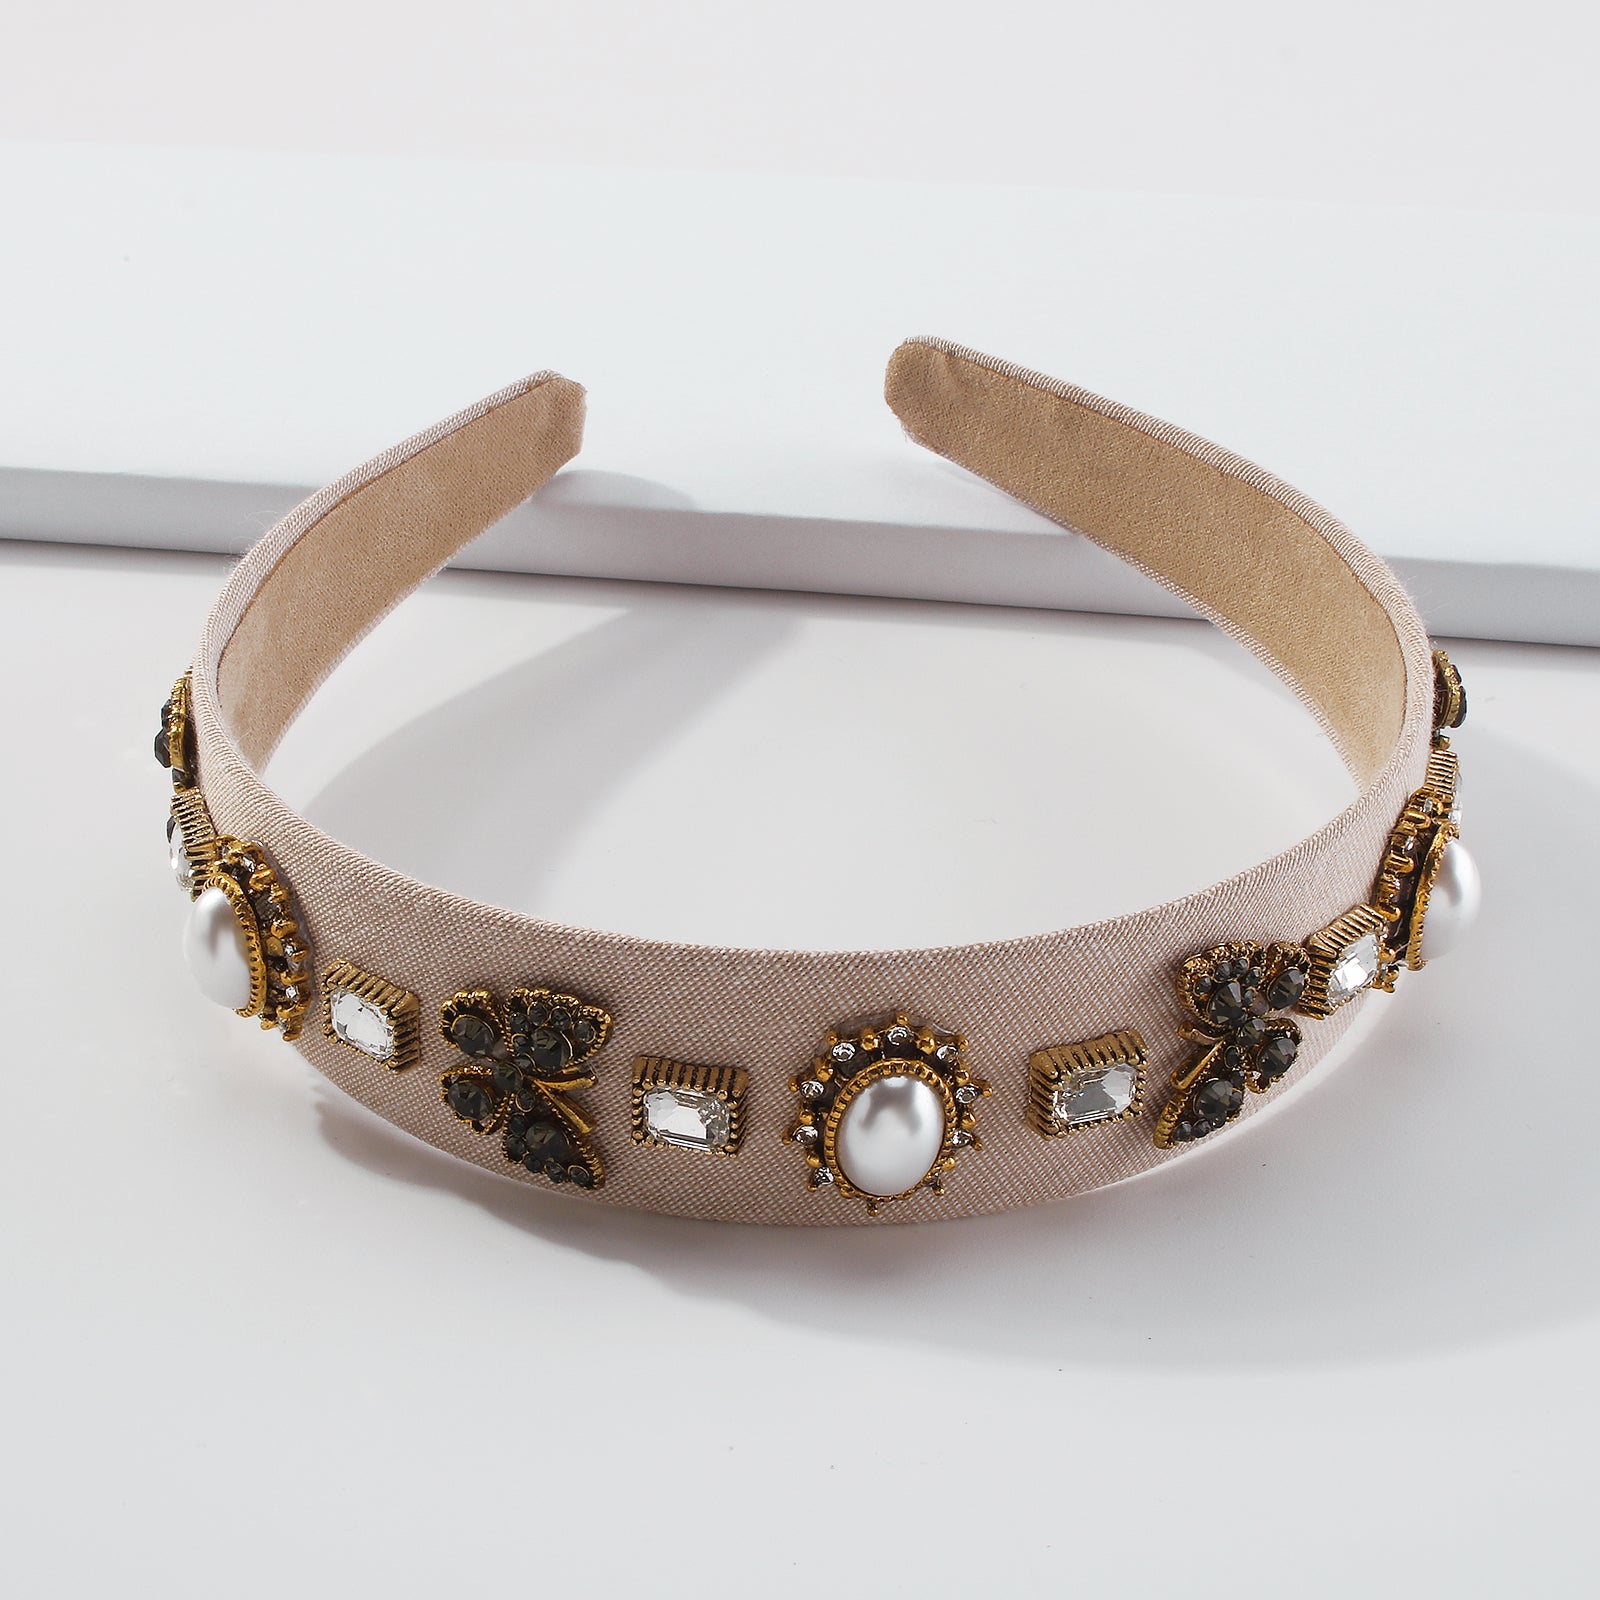 Baroque Rhinestone Butterfly Headbands medyjewelry